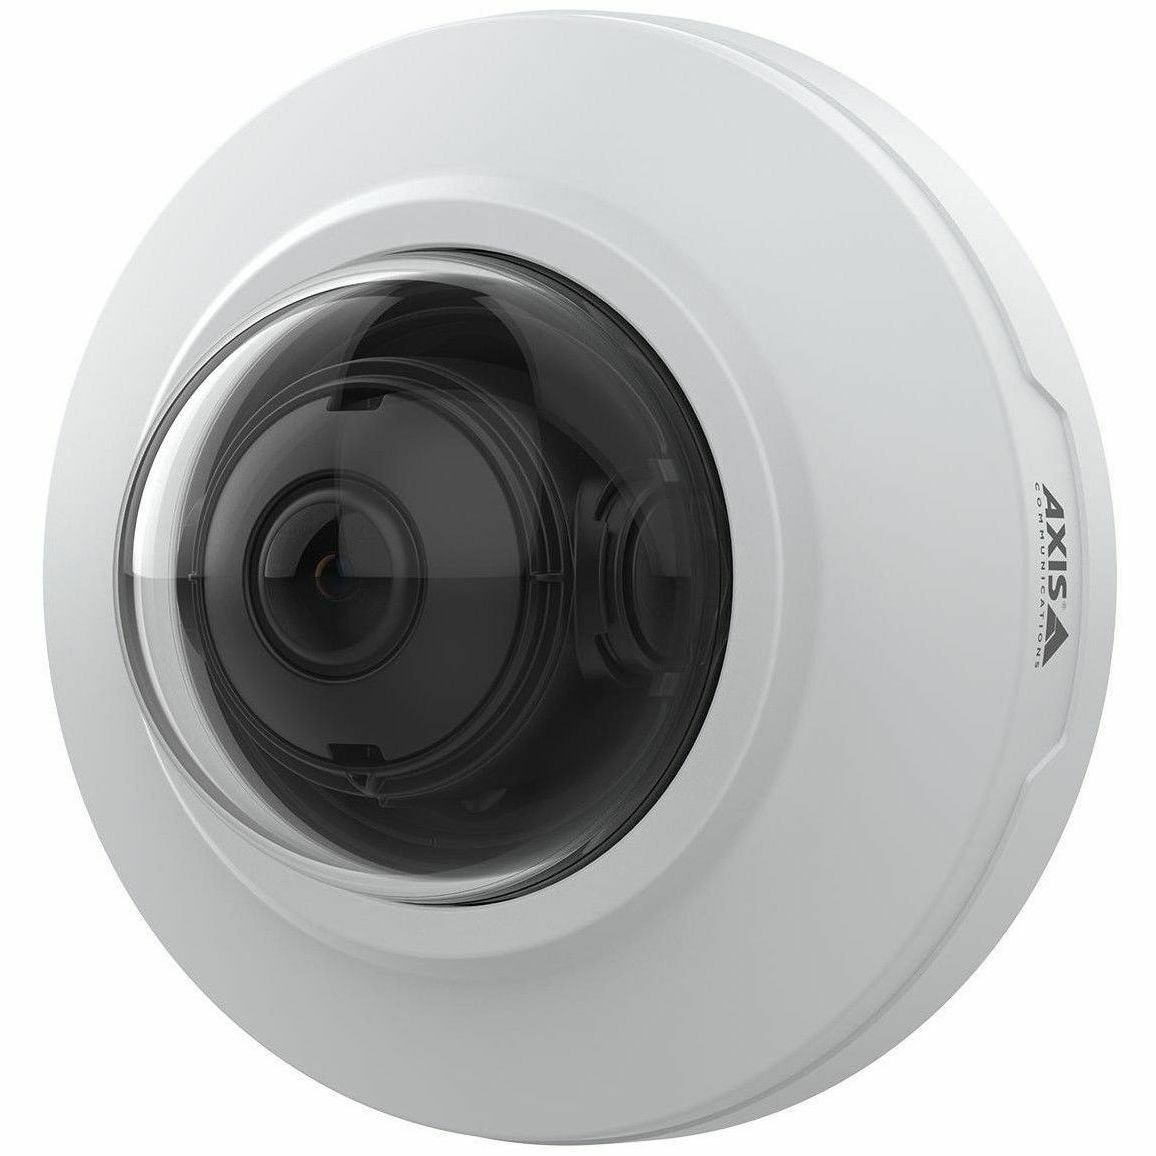 AXIS M3086-V 4 Megapixel Indoor Network Camera - Colour - Mini Dome - White